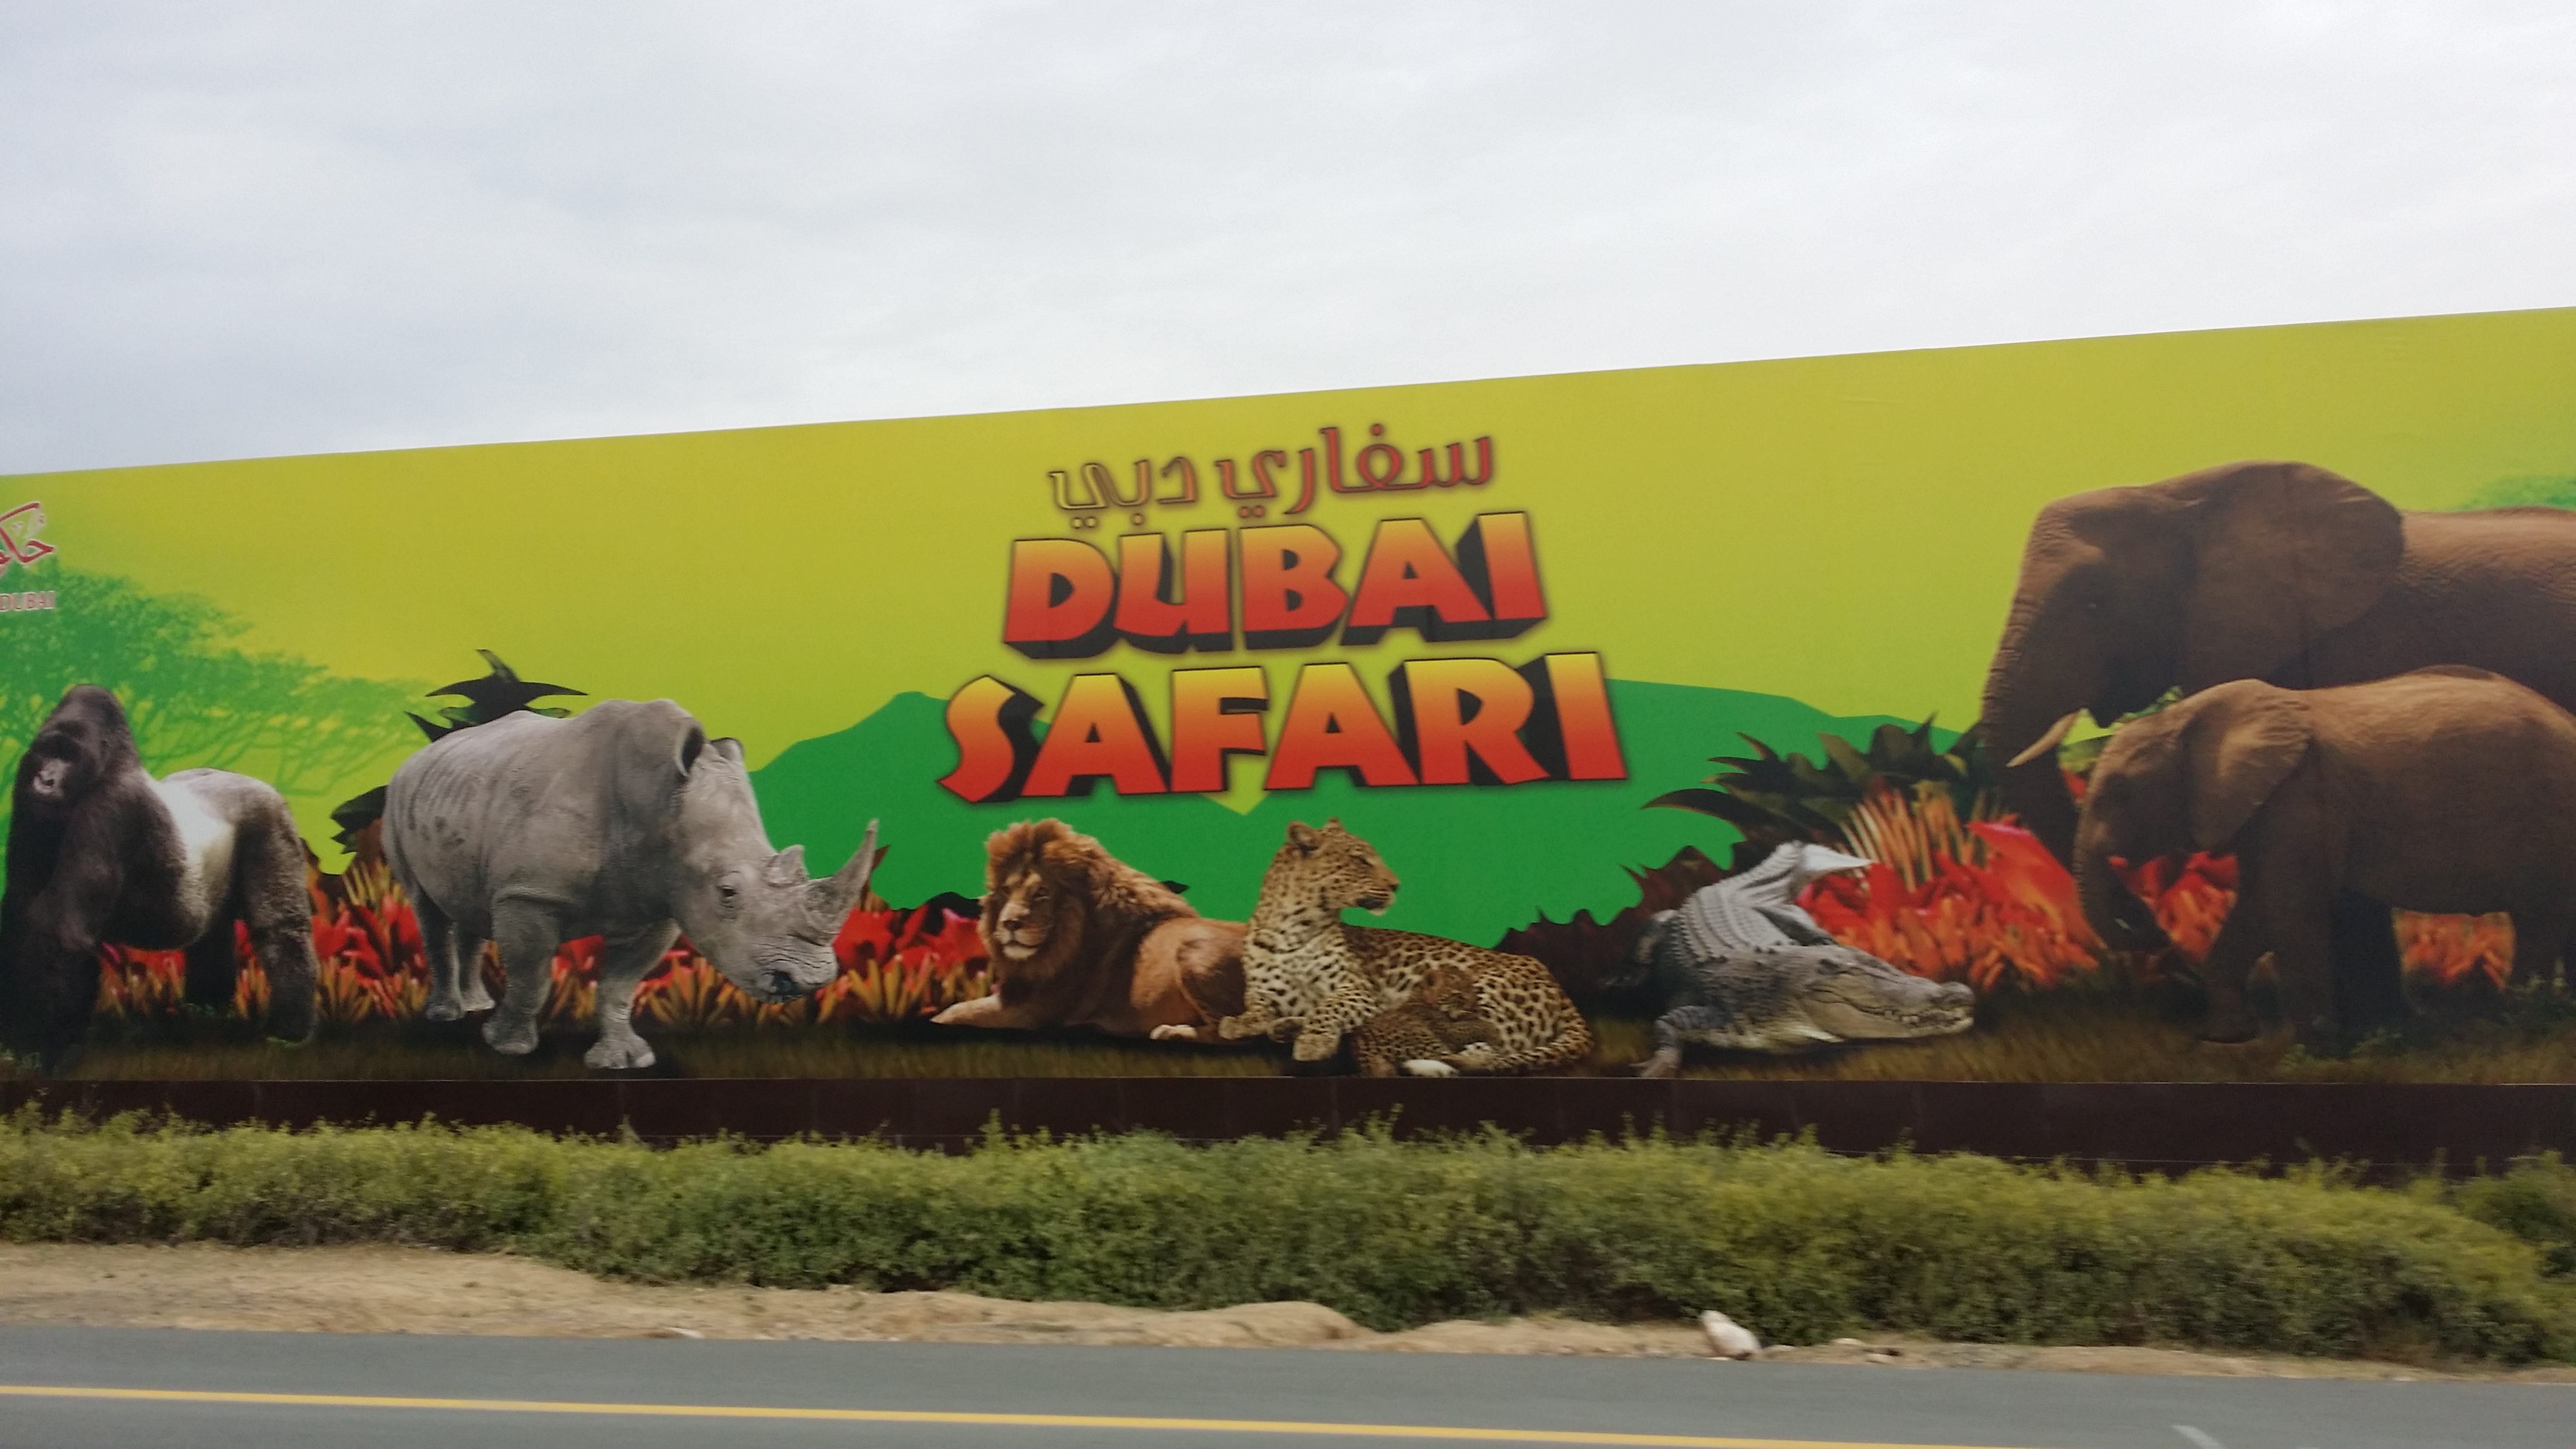 Dubai Safari Park – Al Warqa. Reopened on October 5, 2020.